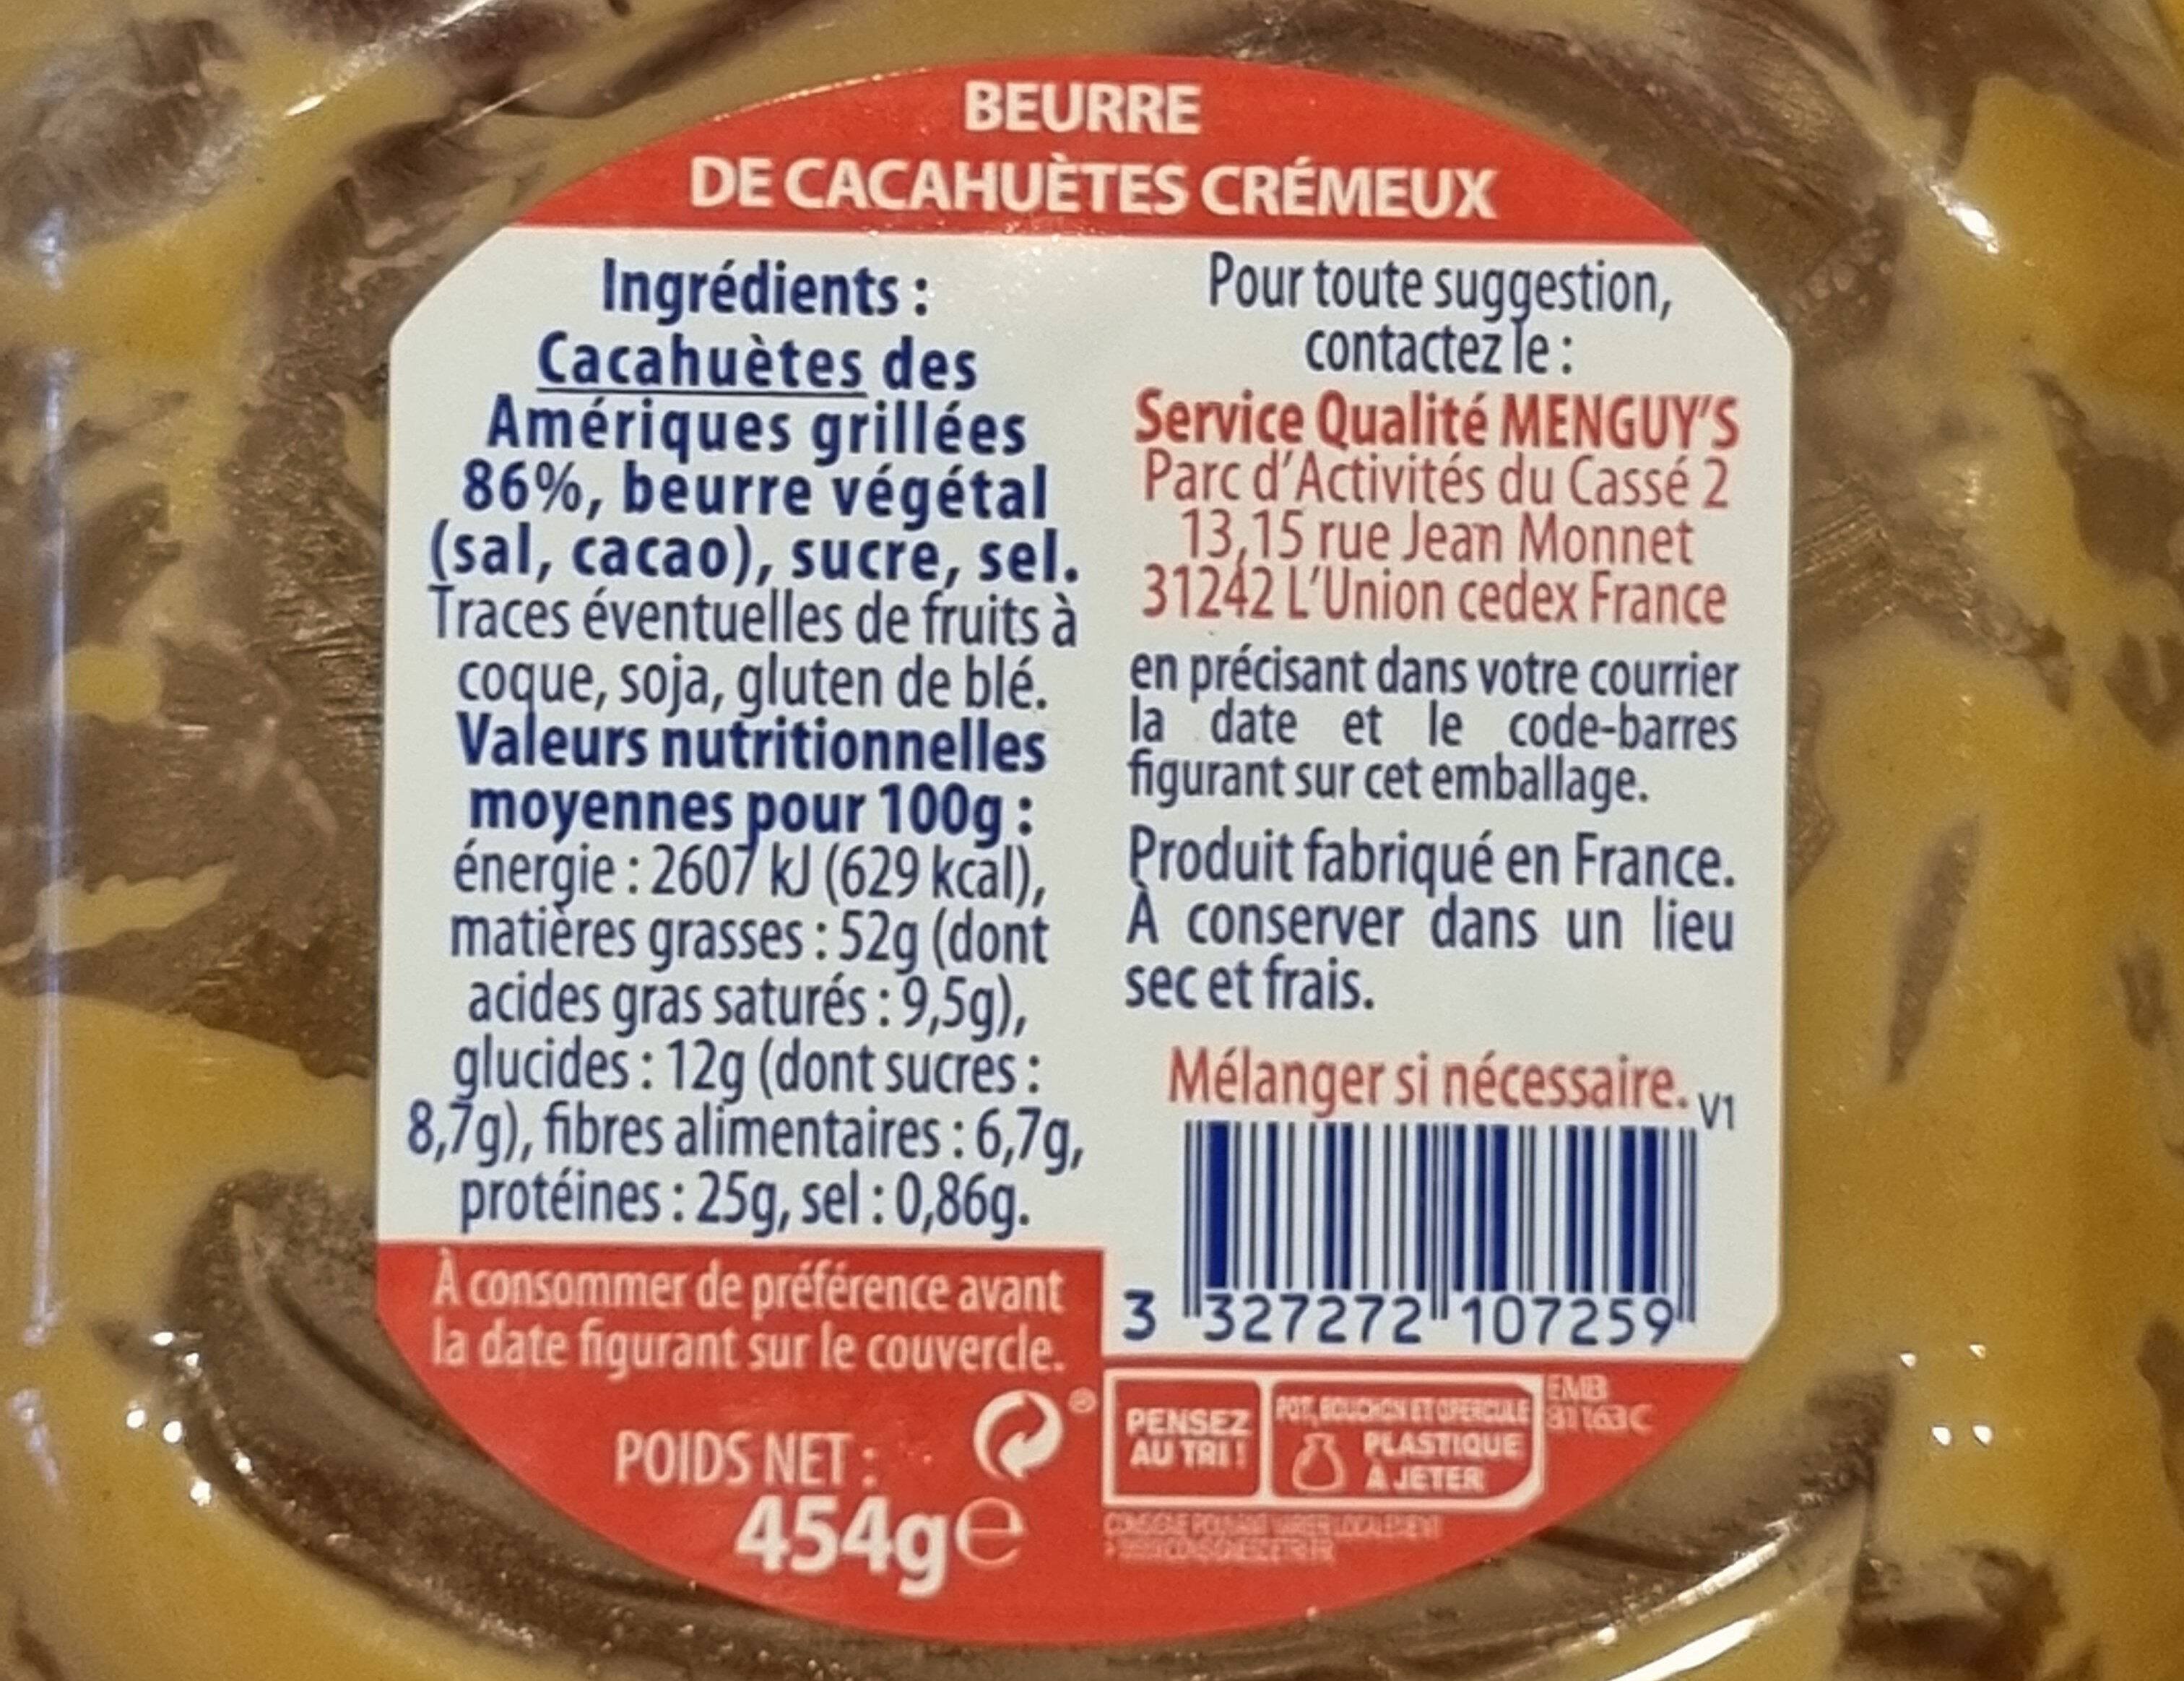 Beurre de cacahuètes creamy - Ingredients